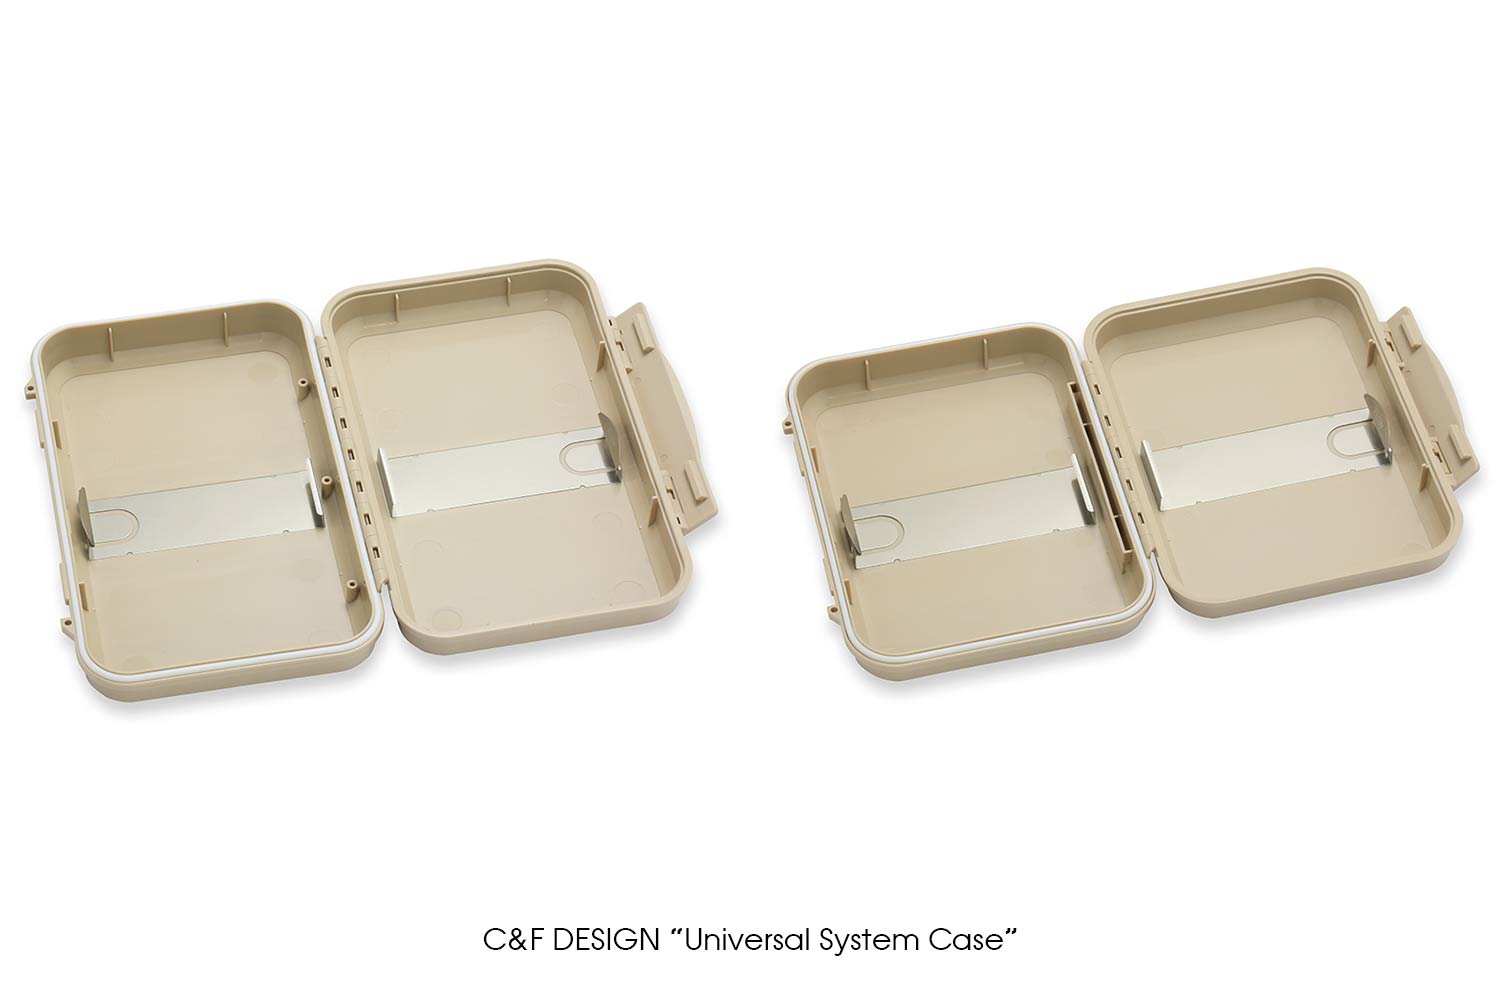 C&F DESIGN "Universal System Case"